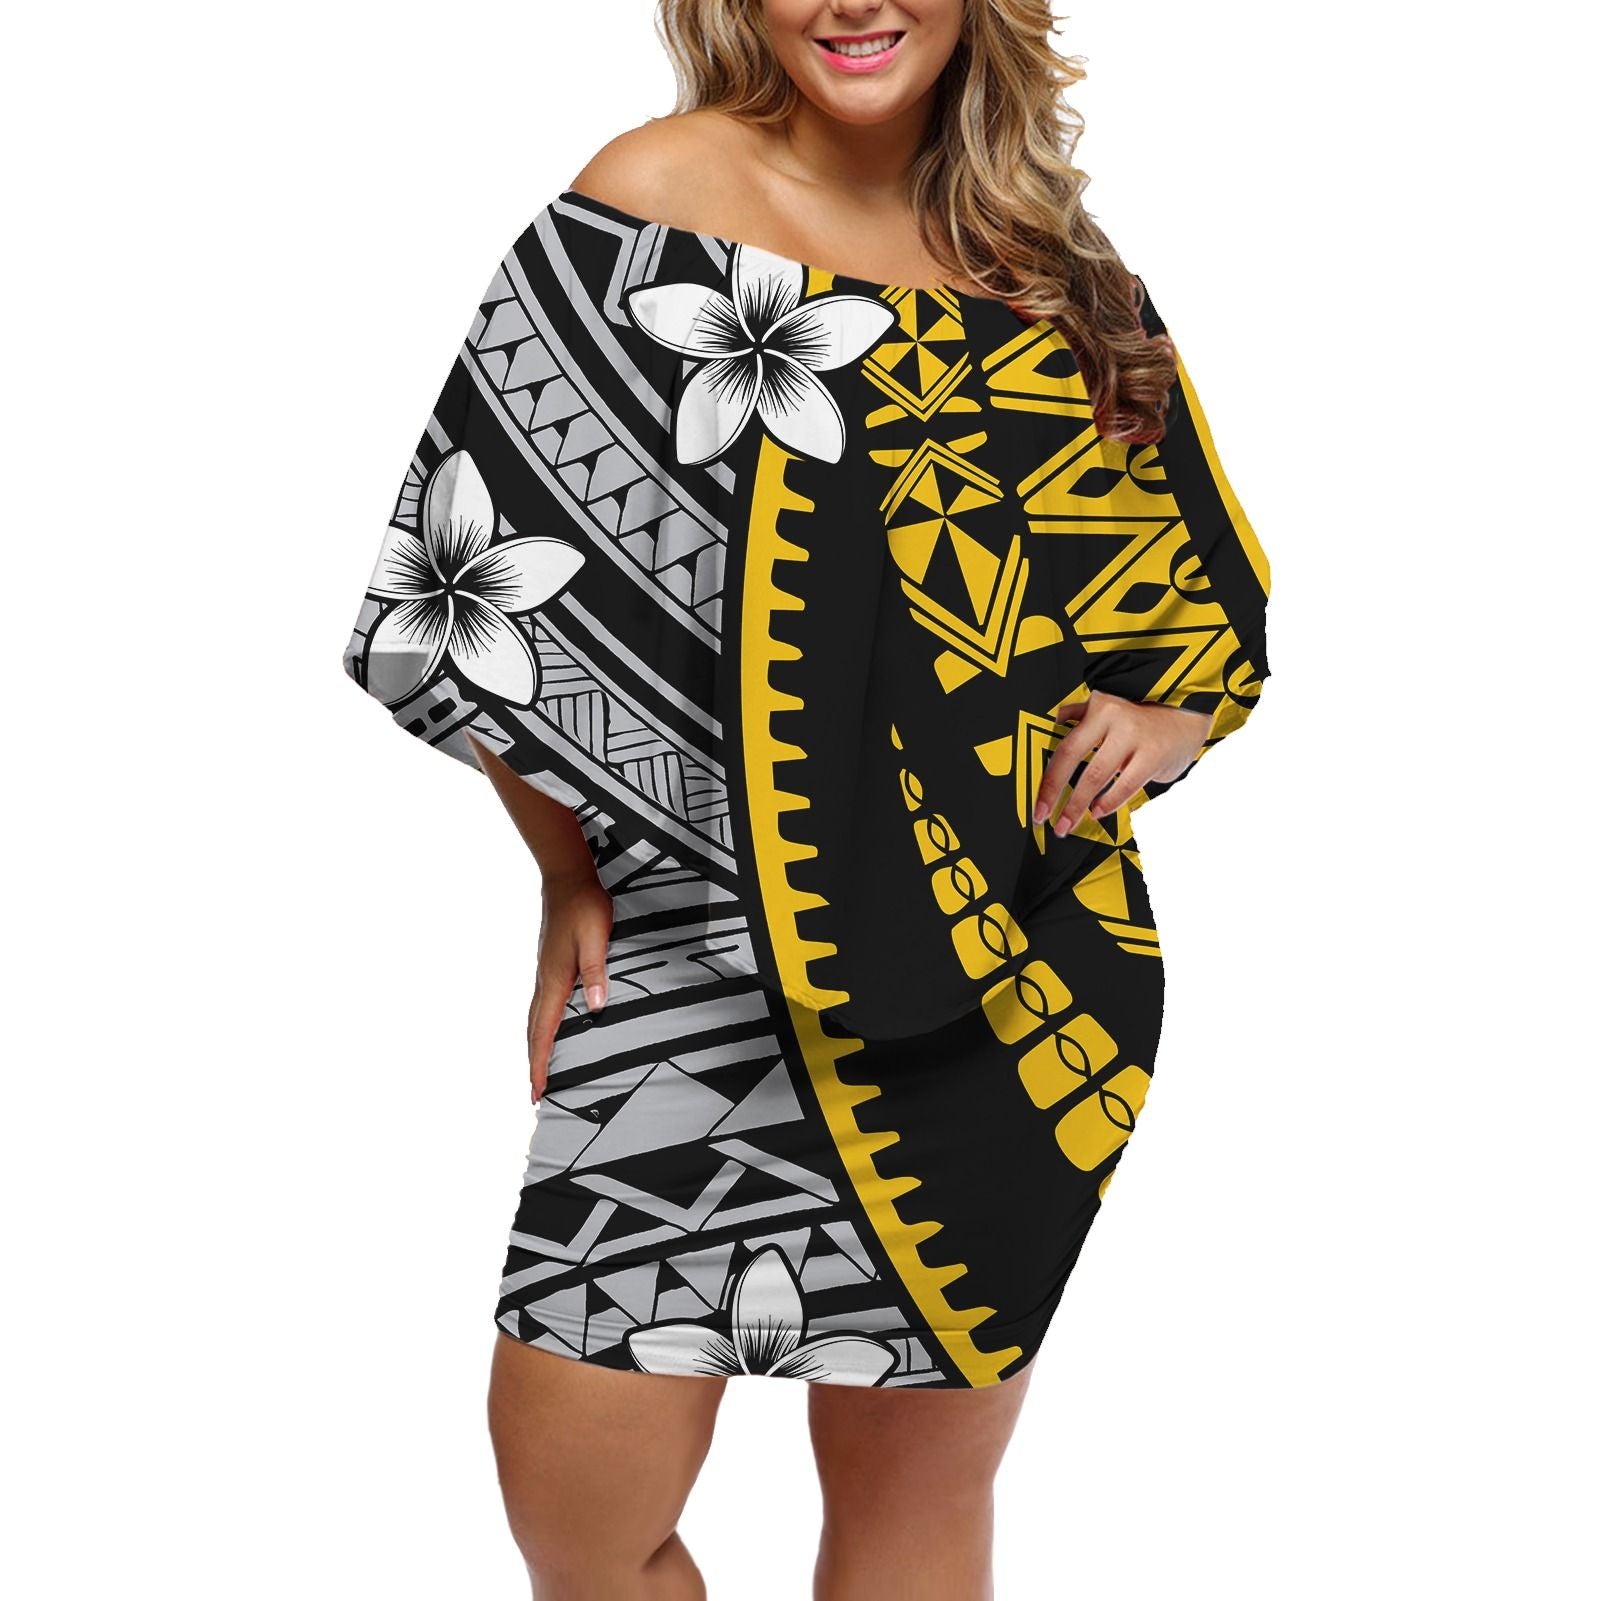 Polynesian Pride Dress - Polynesian Plumeria Kesakesa Gold White Off Shoulder Short Dress Women Gold - Polynesian Pride